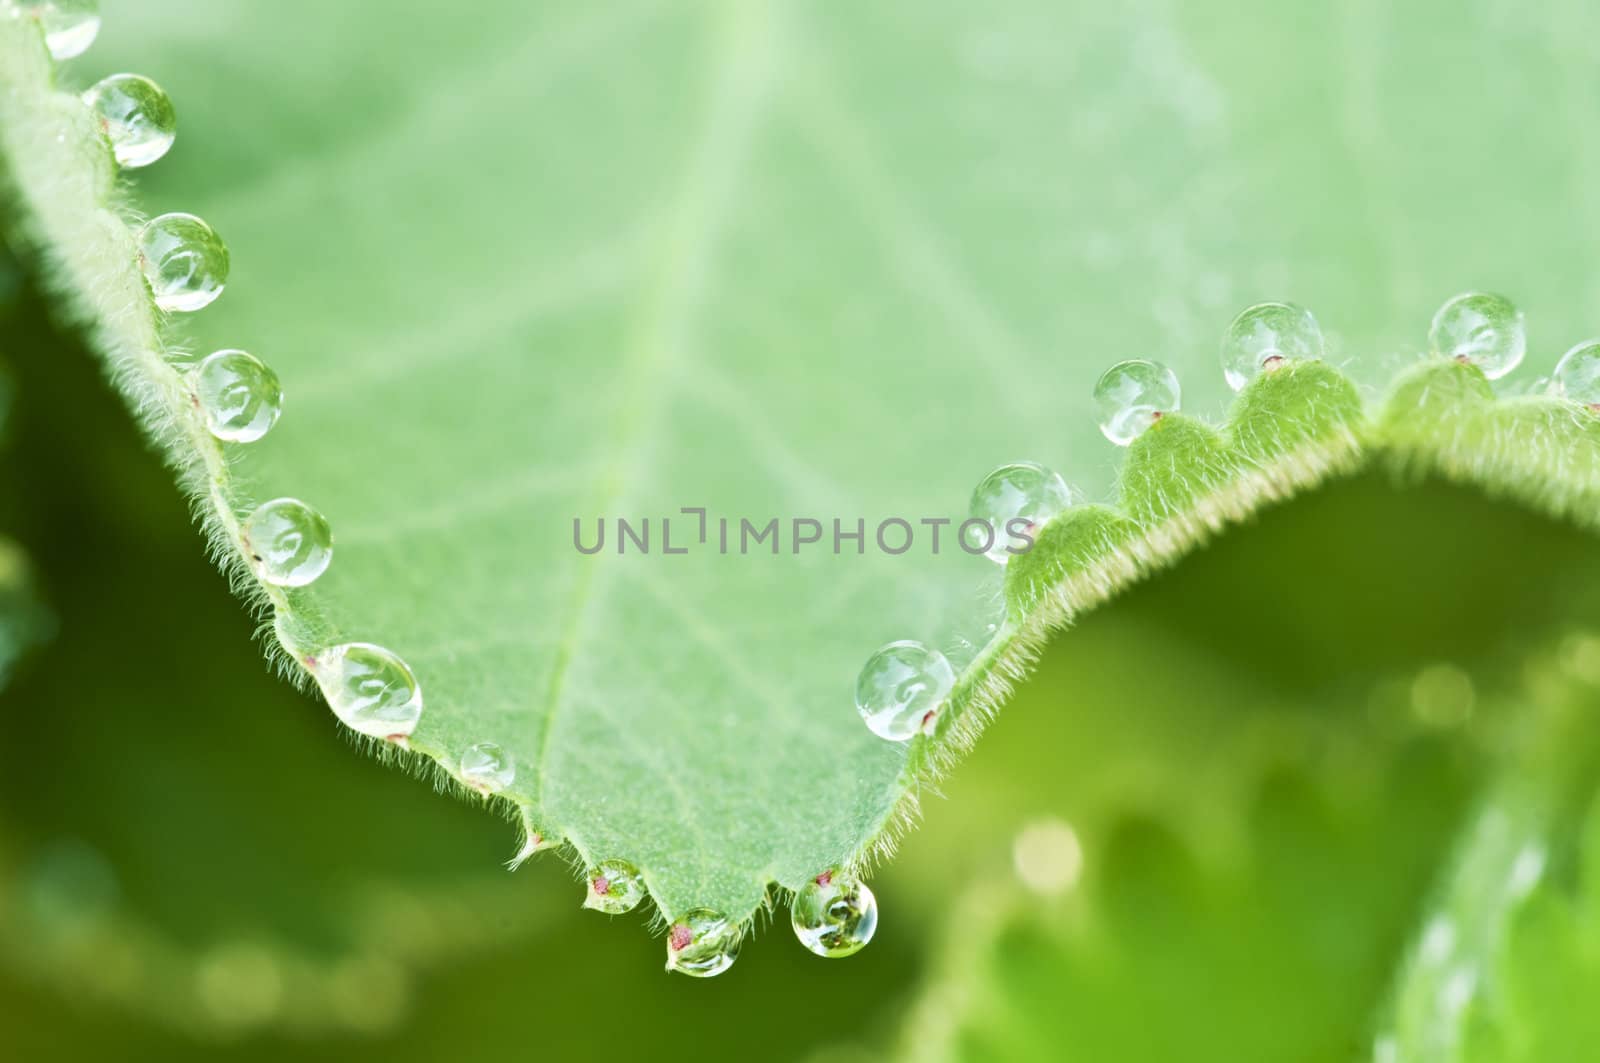 Closeup of dew drops on a leaf edge